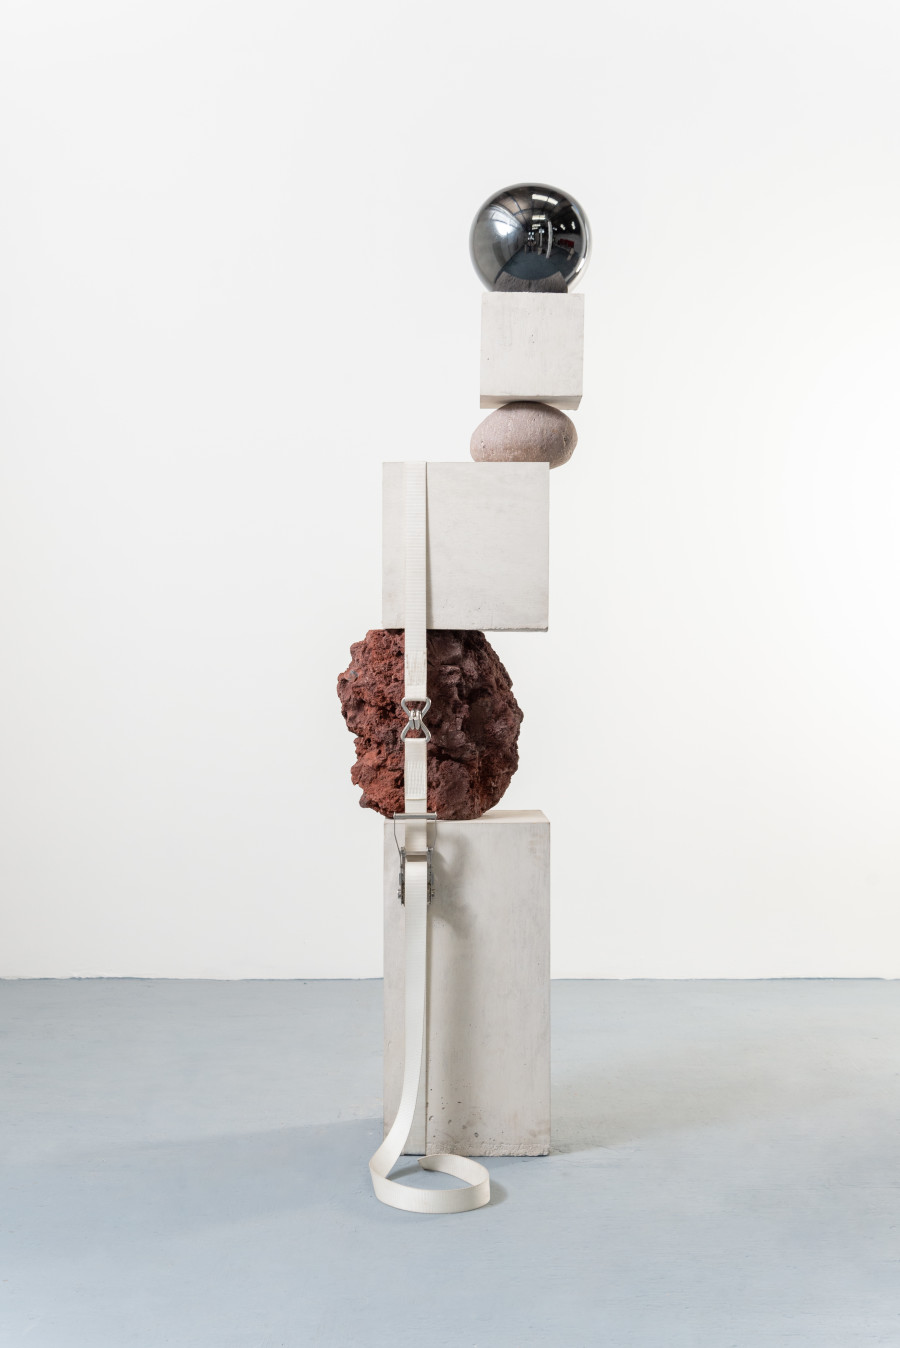 Jose Dávila, Fundamental concern, 2022, Concrete, rock, boulder, glass sphere, and ratchet strap, 230 x 53 x 45 cm. Photo: Agustín Arce